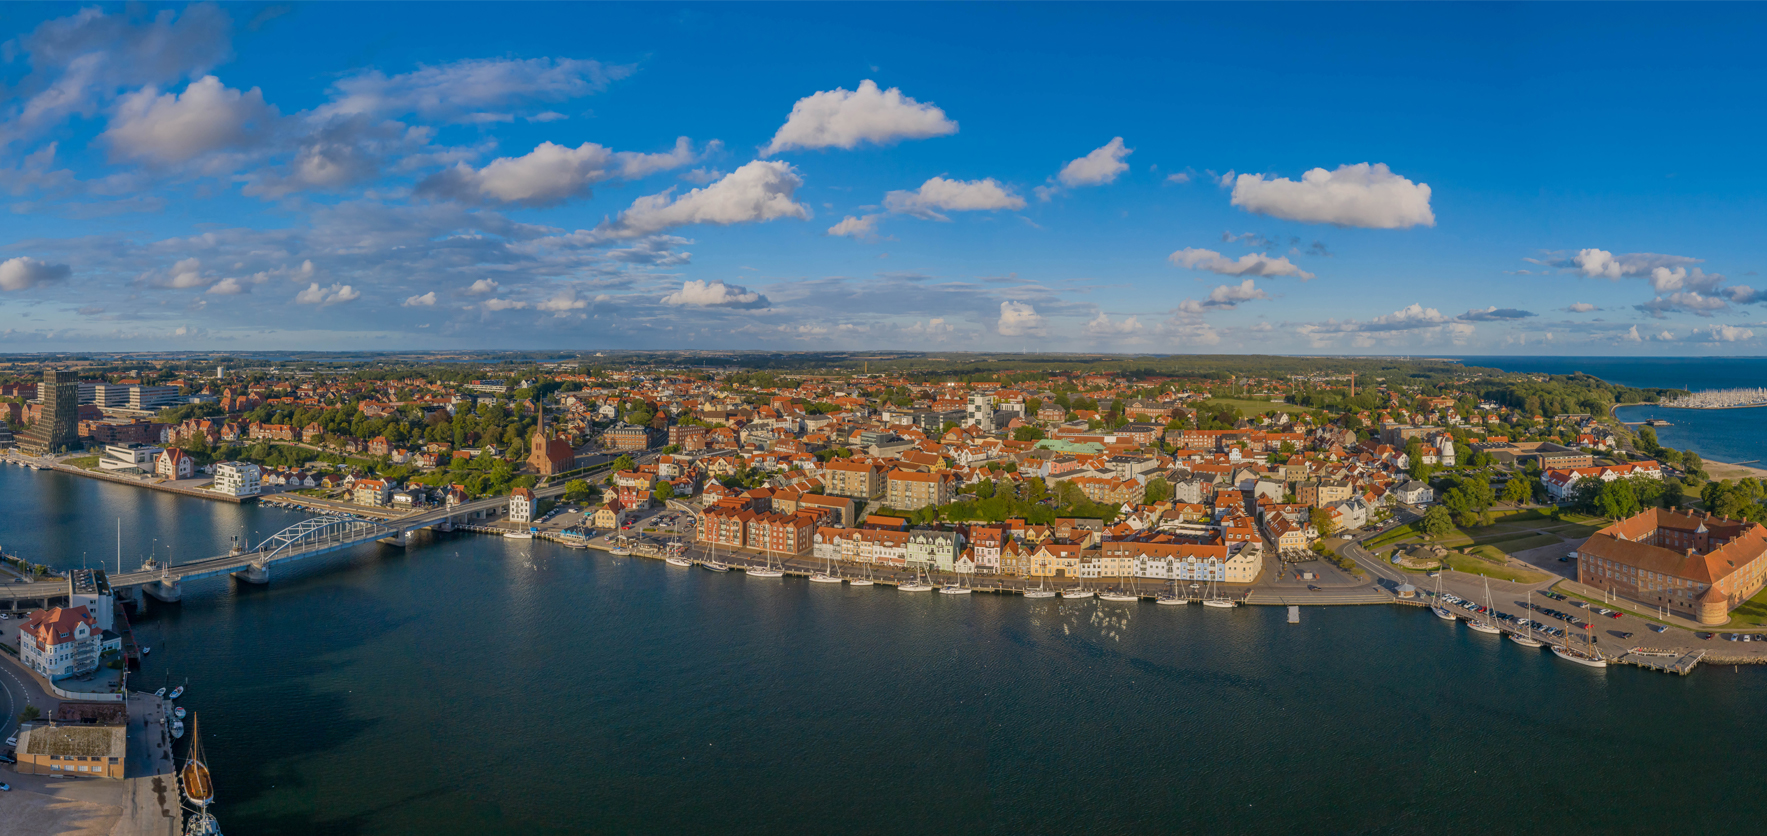 Aerial view of city, harbor and castle in Sonderborg, Jutland, Denmark, Europe.